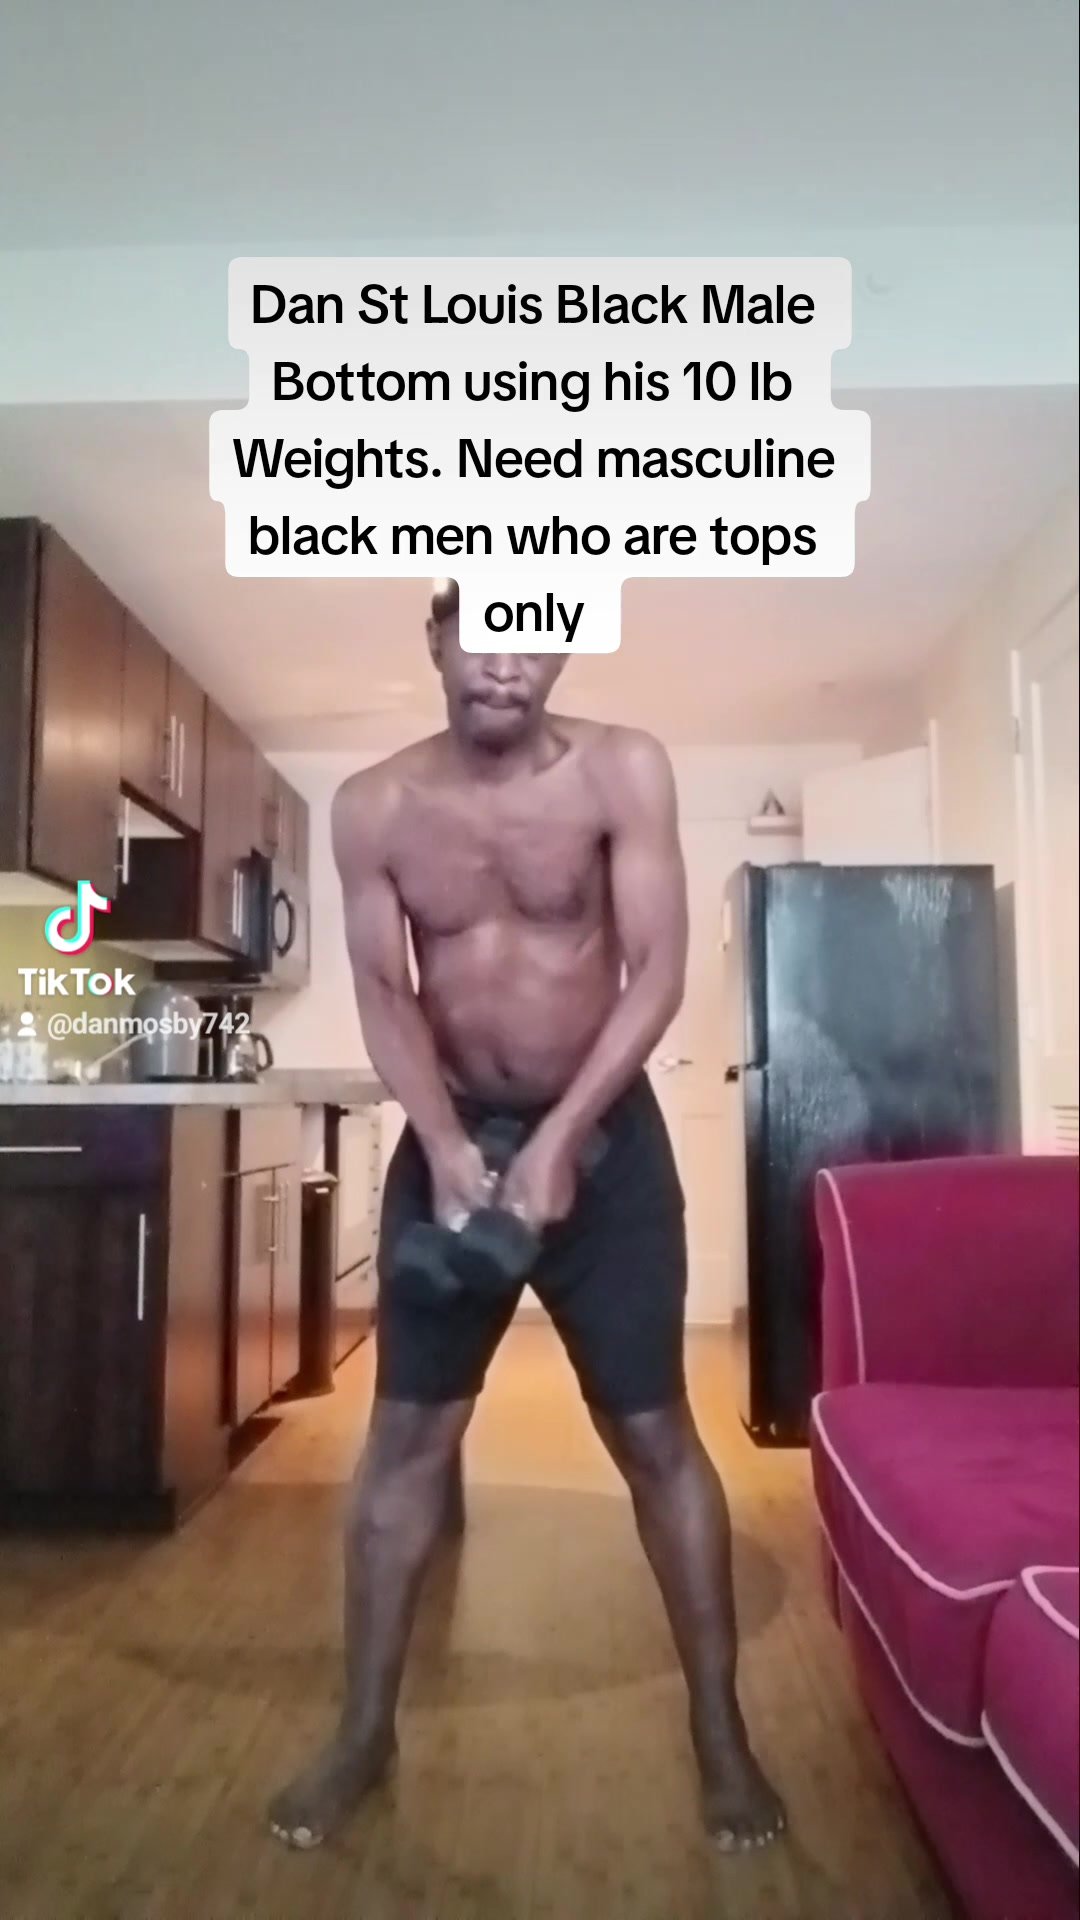 Dan St. Louis Black Male Bottom 10 lb Weights 1